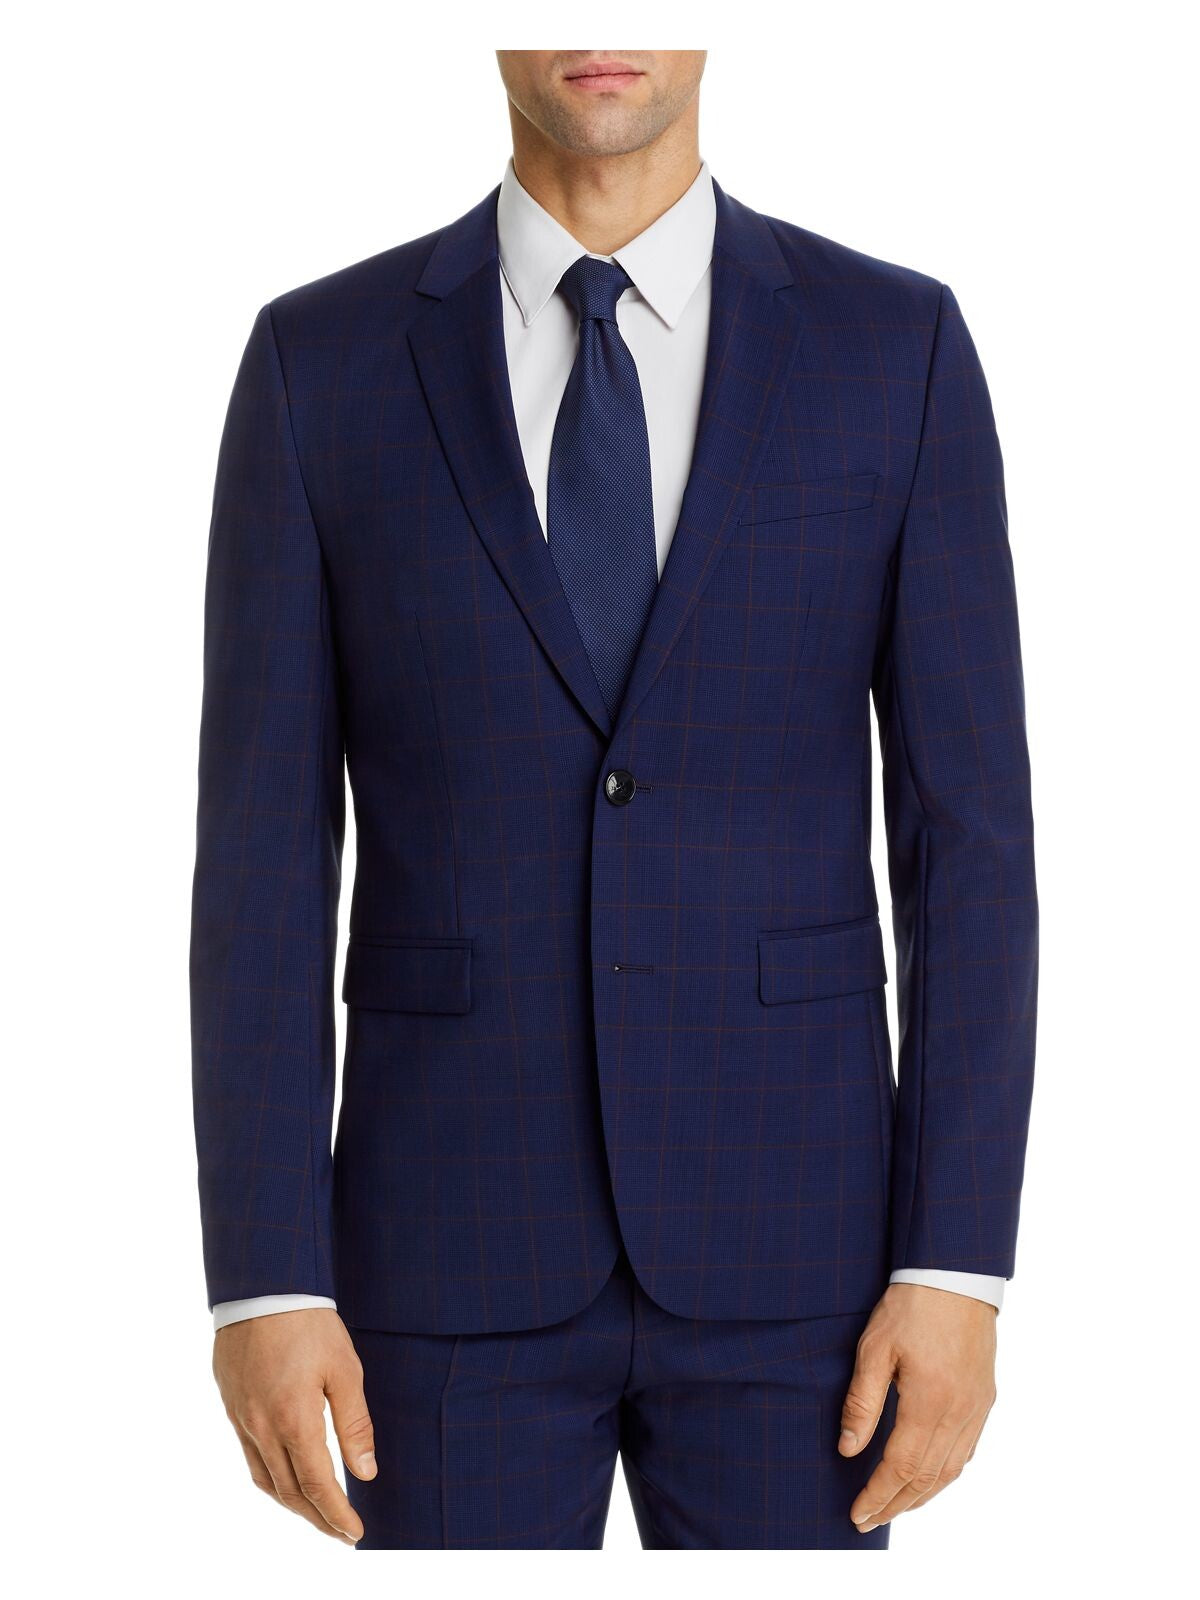 HUGO BOSS Mens Blue Single Breasted, Multi-Check Extra Slim Fit Wool Blend Suit Separate Blazer Jacket 46R